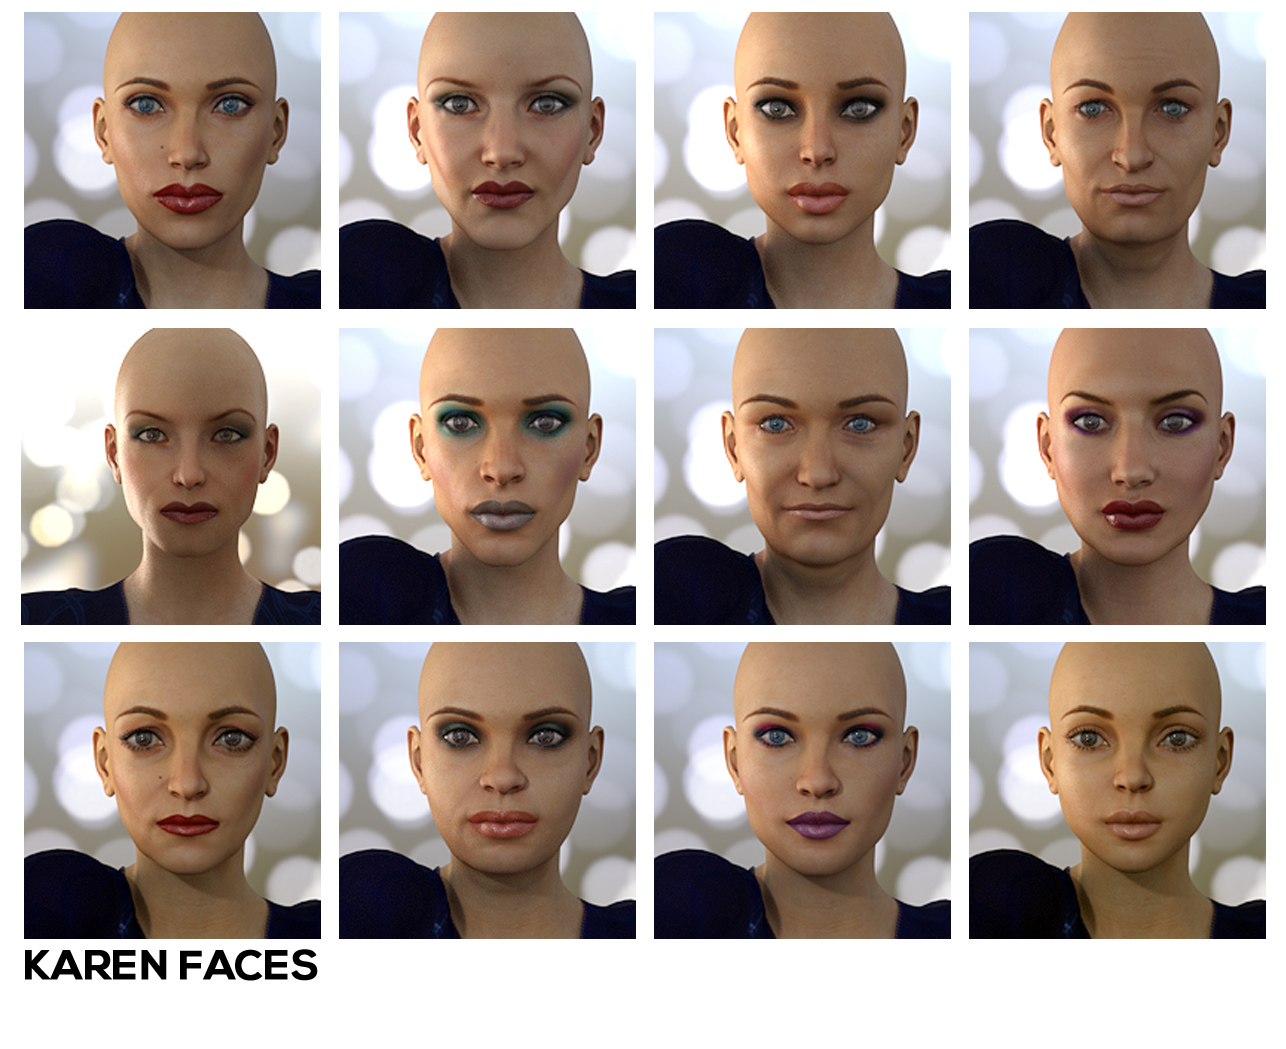 ULTRAGENESIS: Faces of G by: RuntimeDNASyydTraveler, 3D Models by Daz 3D